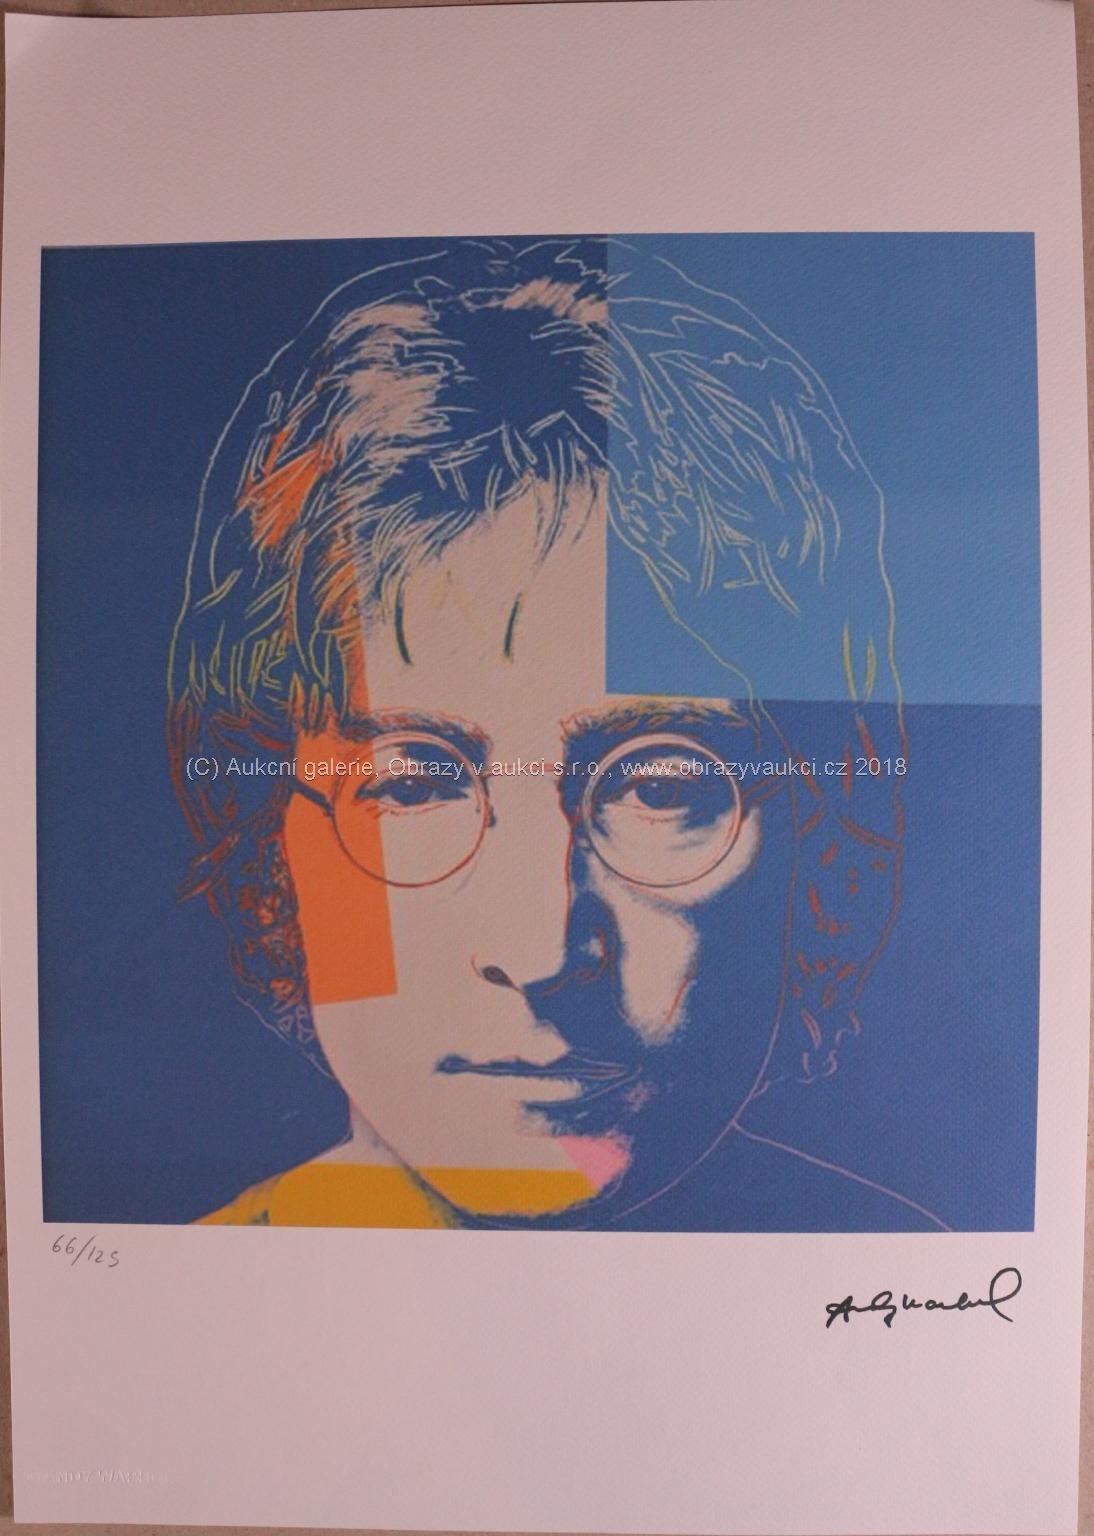 Andy Warhol - John Lennon